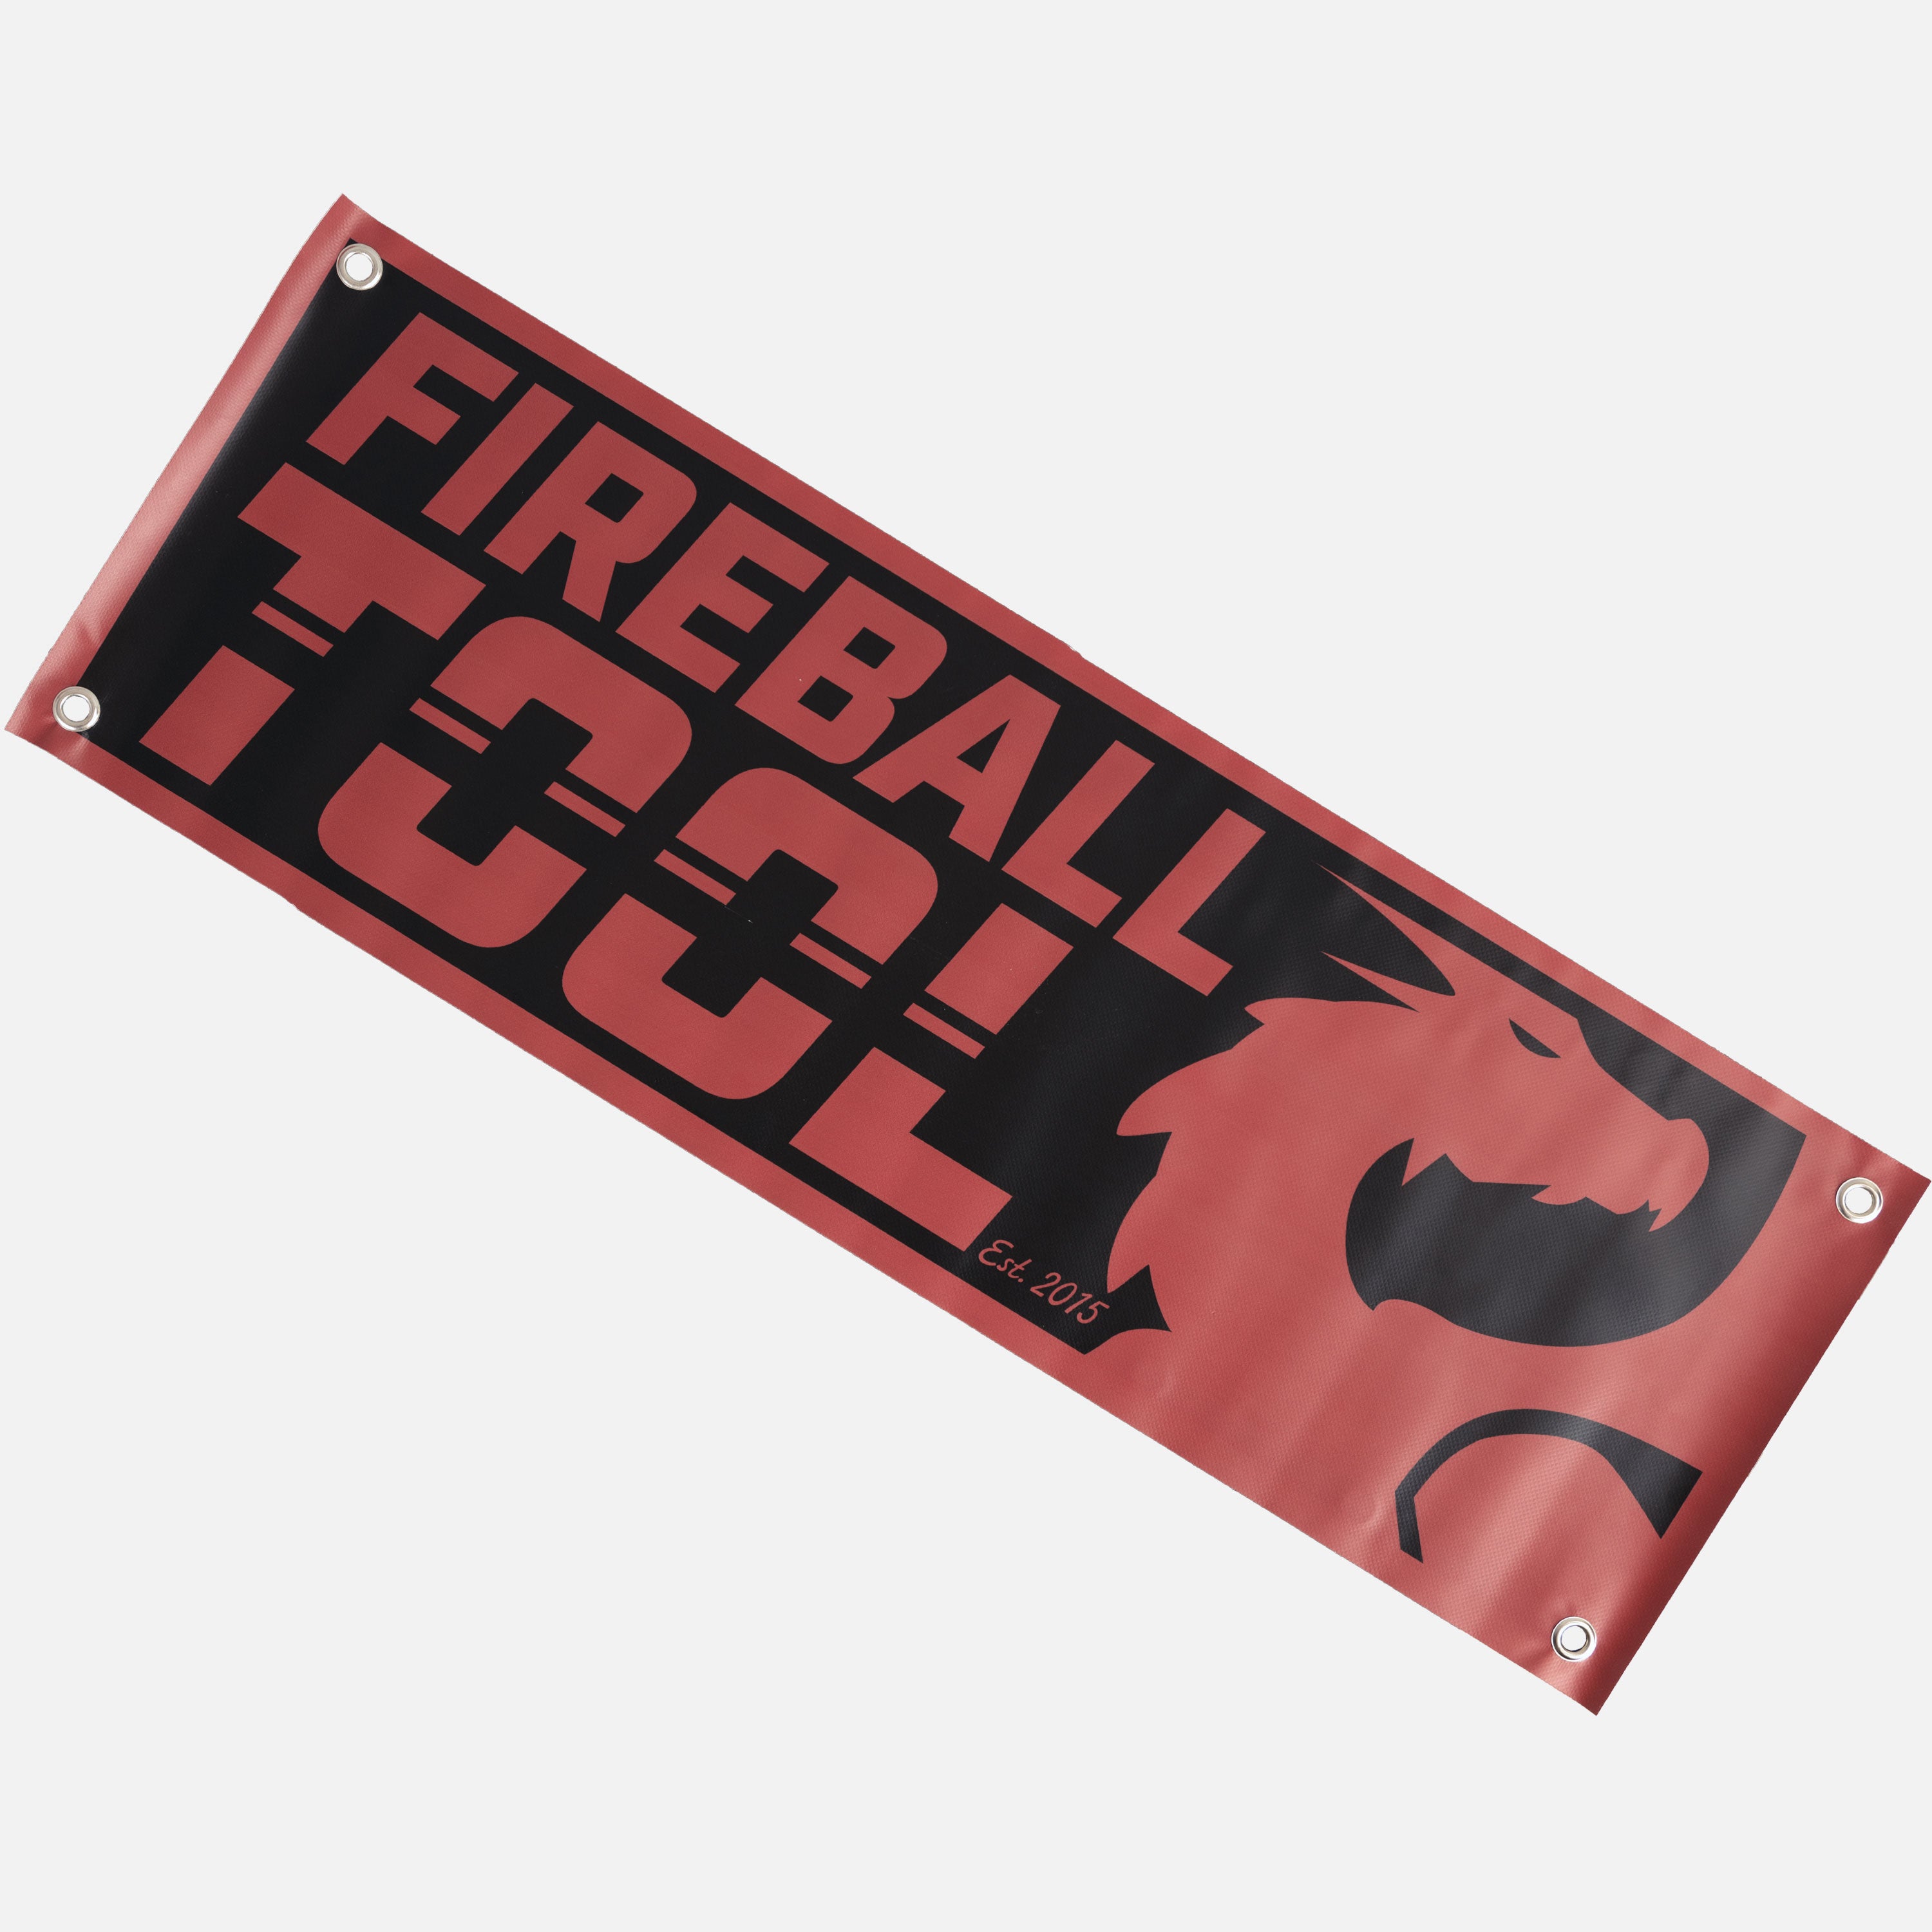 Fireball Vinyl Banner